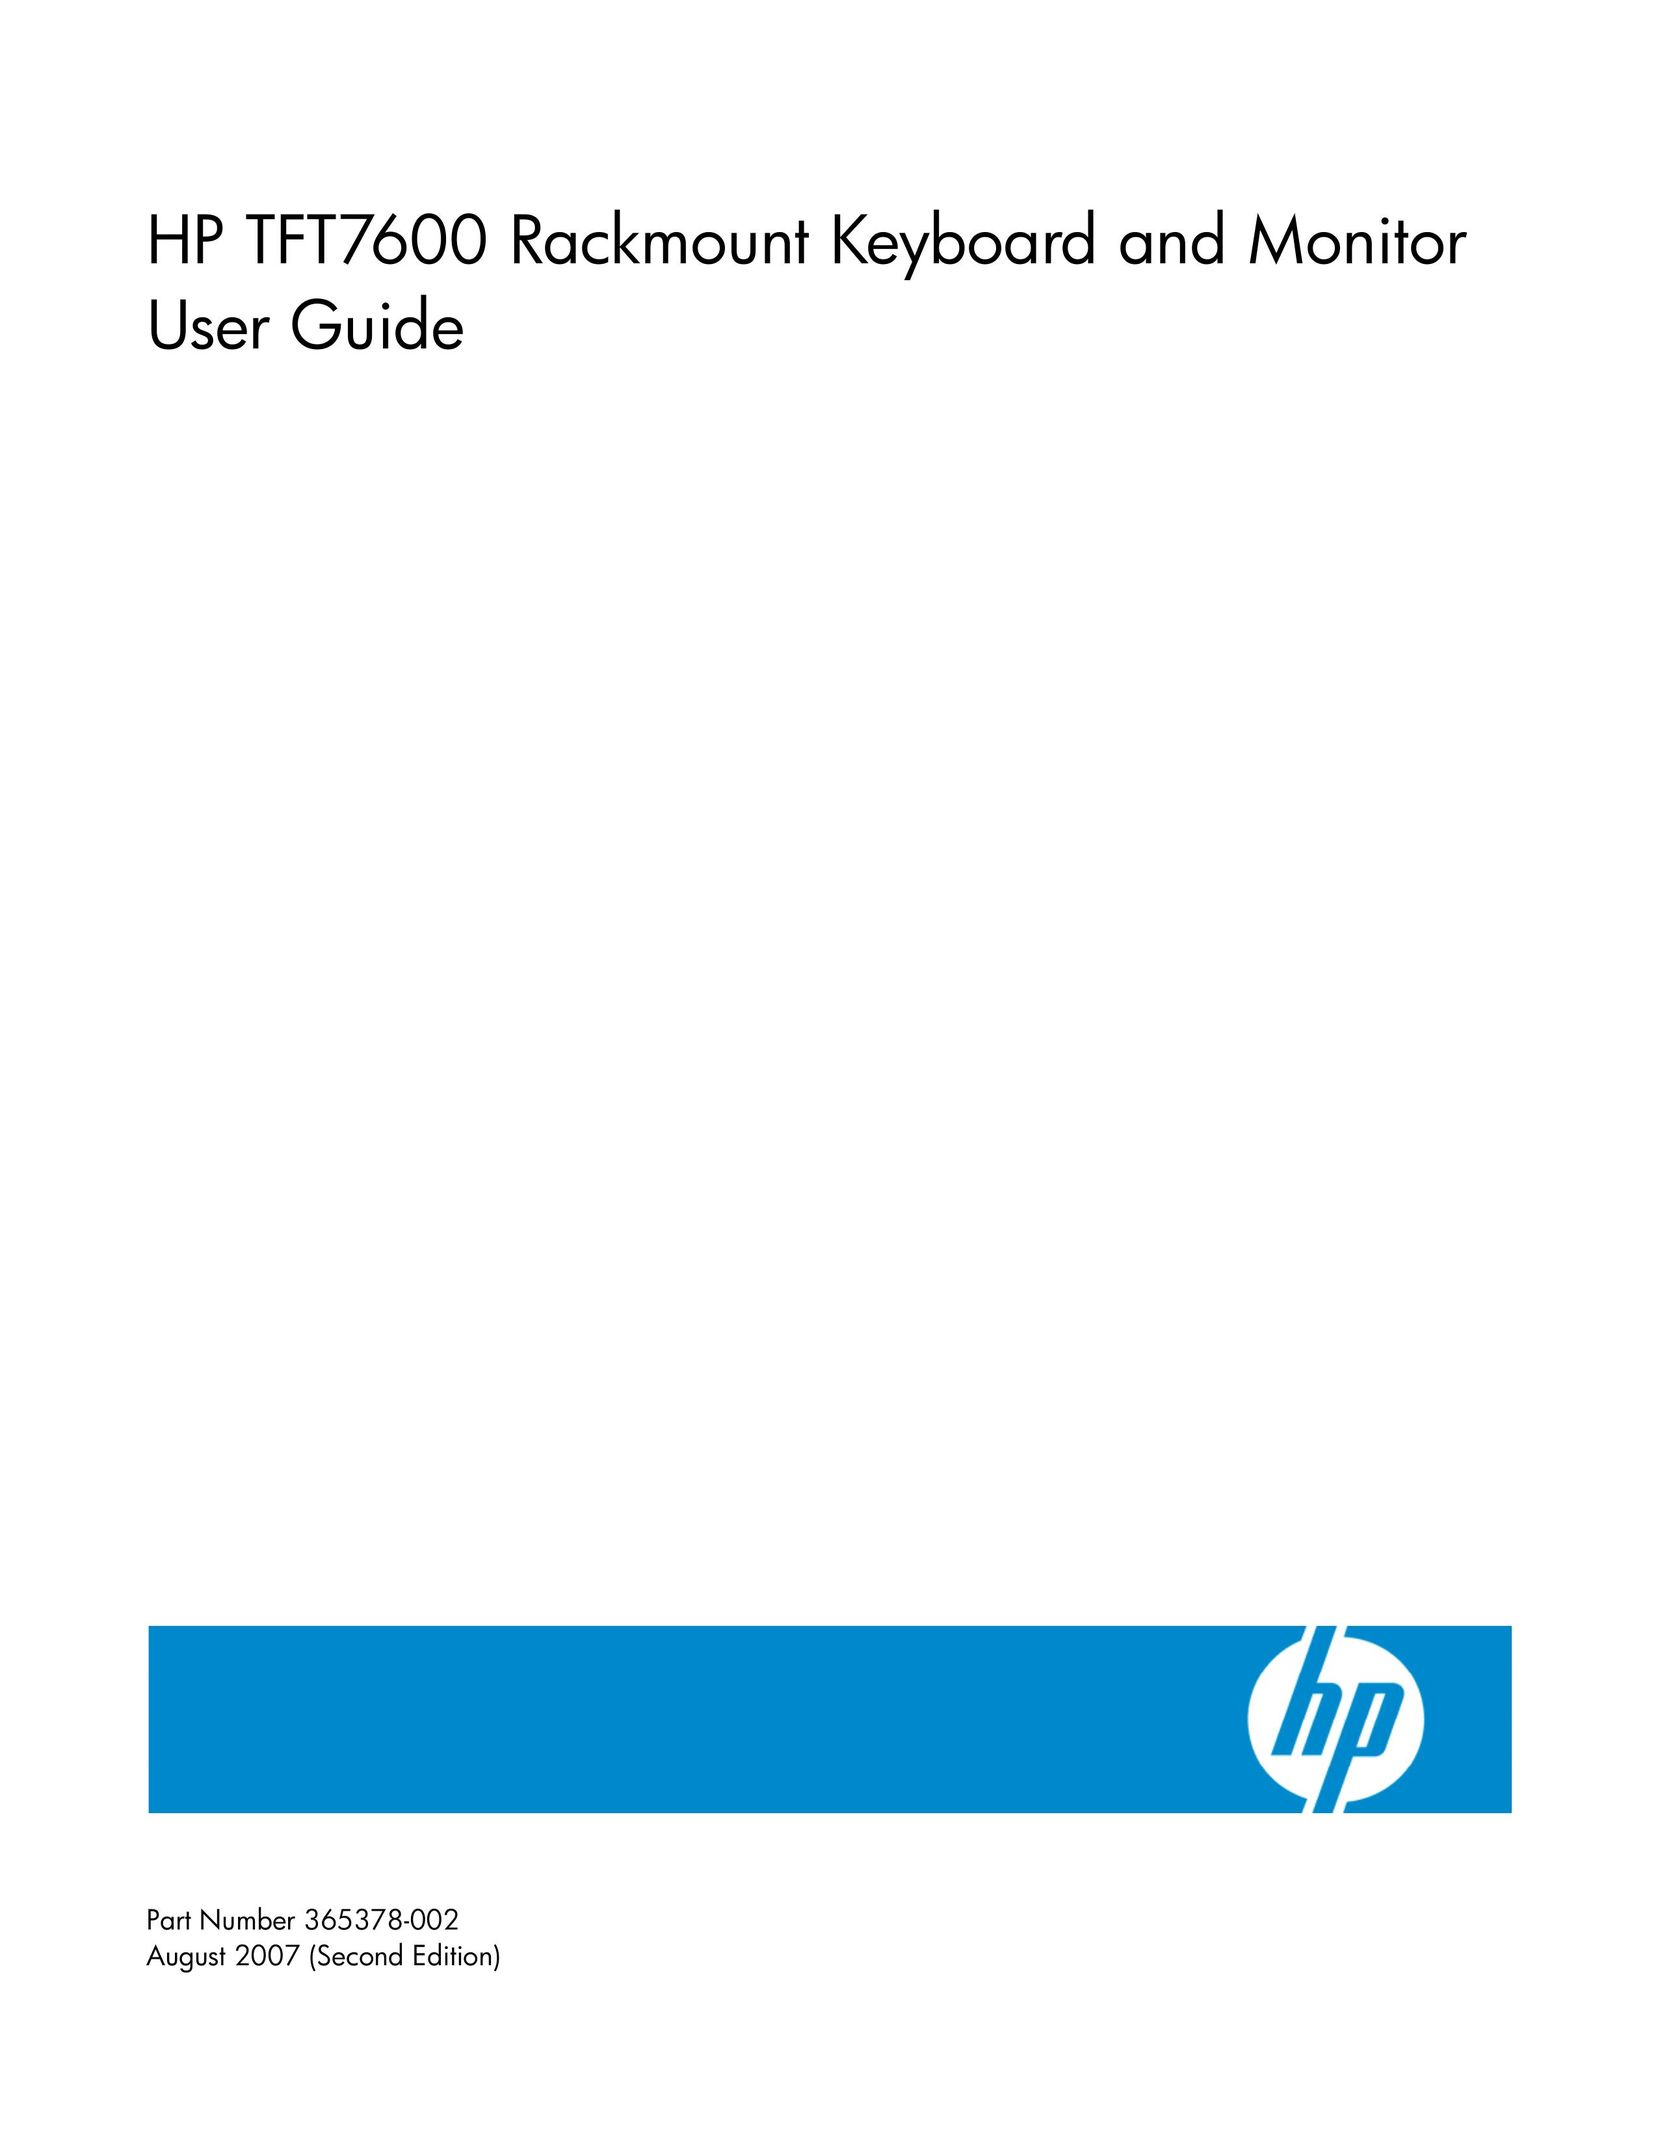 HP (Hewlett-Packard) TFT7600 Computer Keyboard User Manual